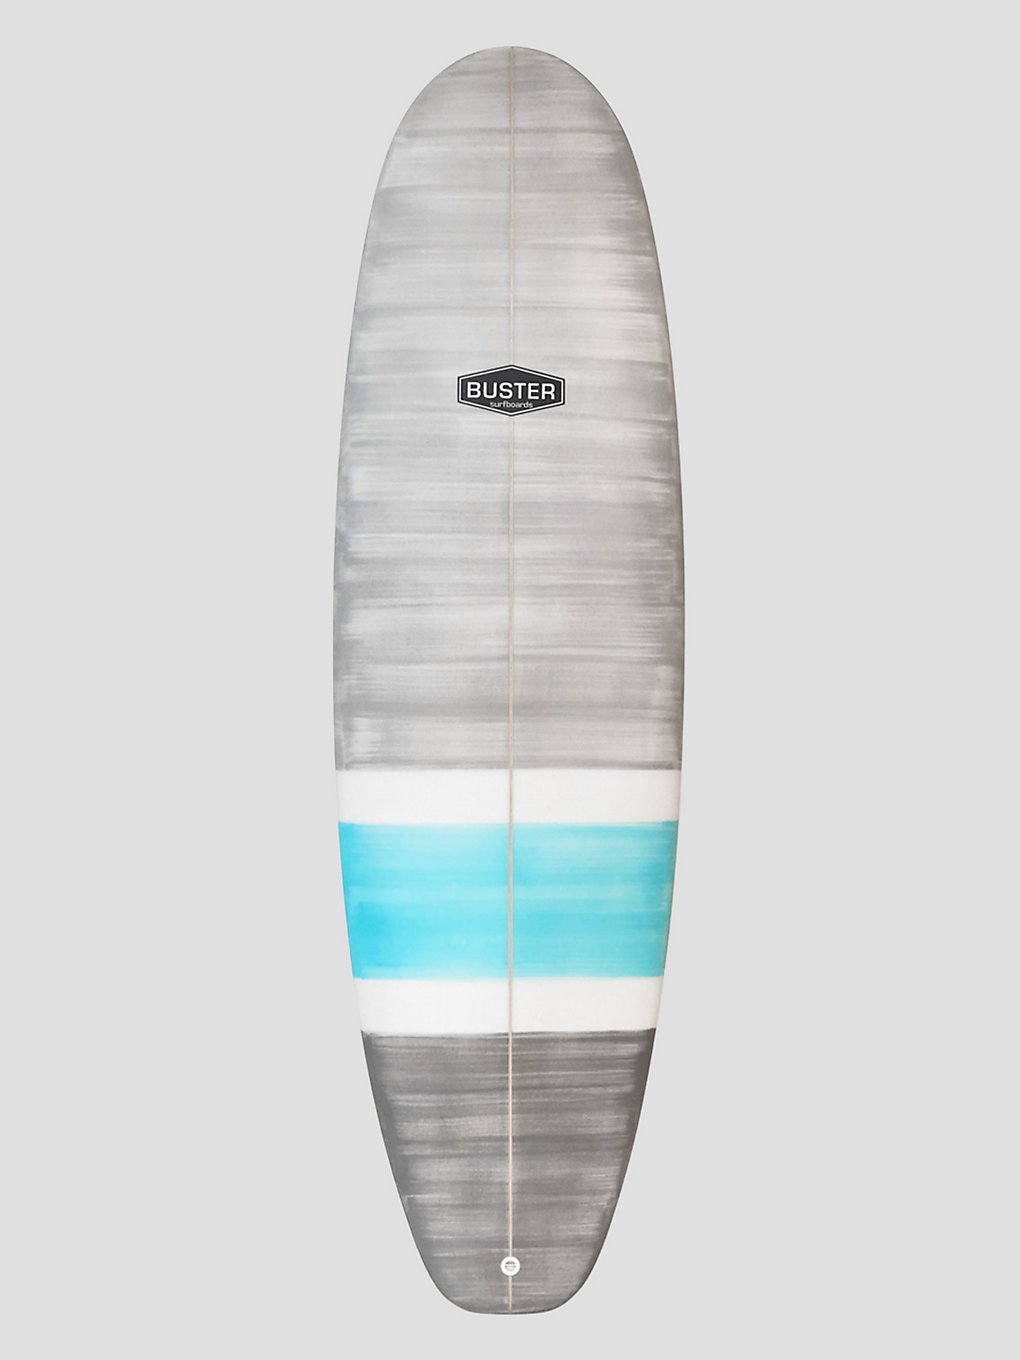 buster 64 wombat surfboard grau weiss/blau/grau